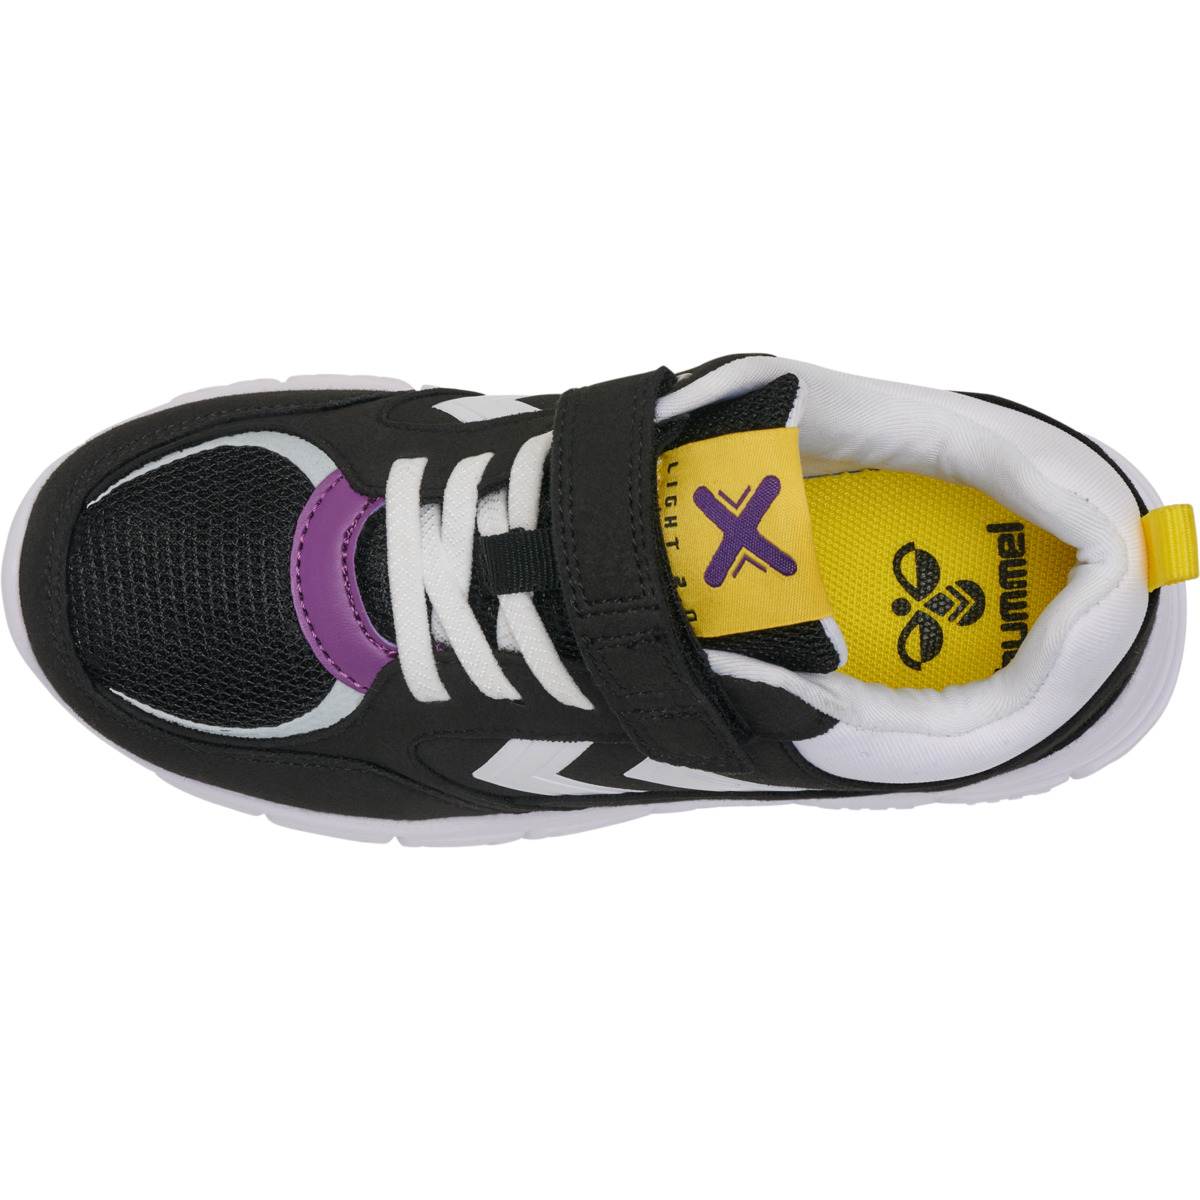  X-Light 2.0 Jr. Sneakers, Sort, 30